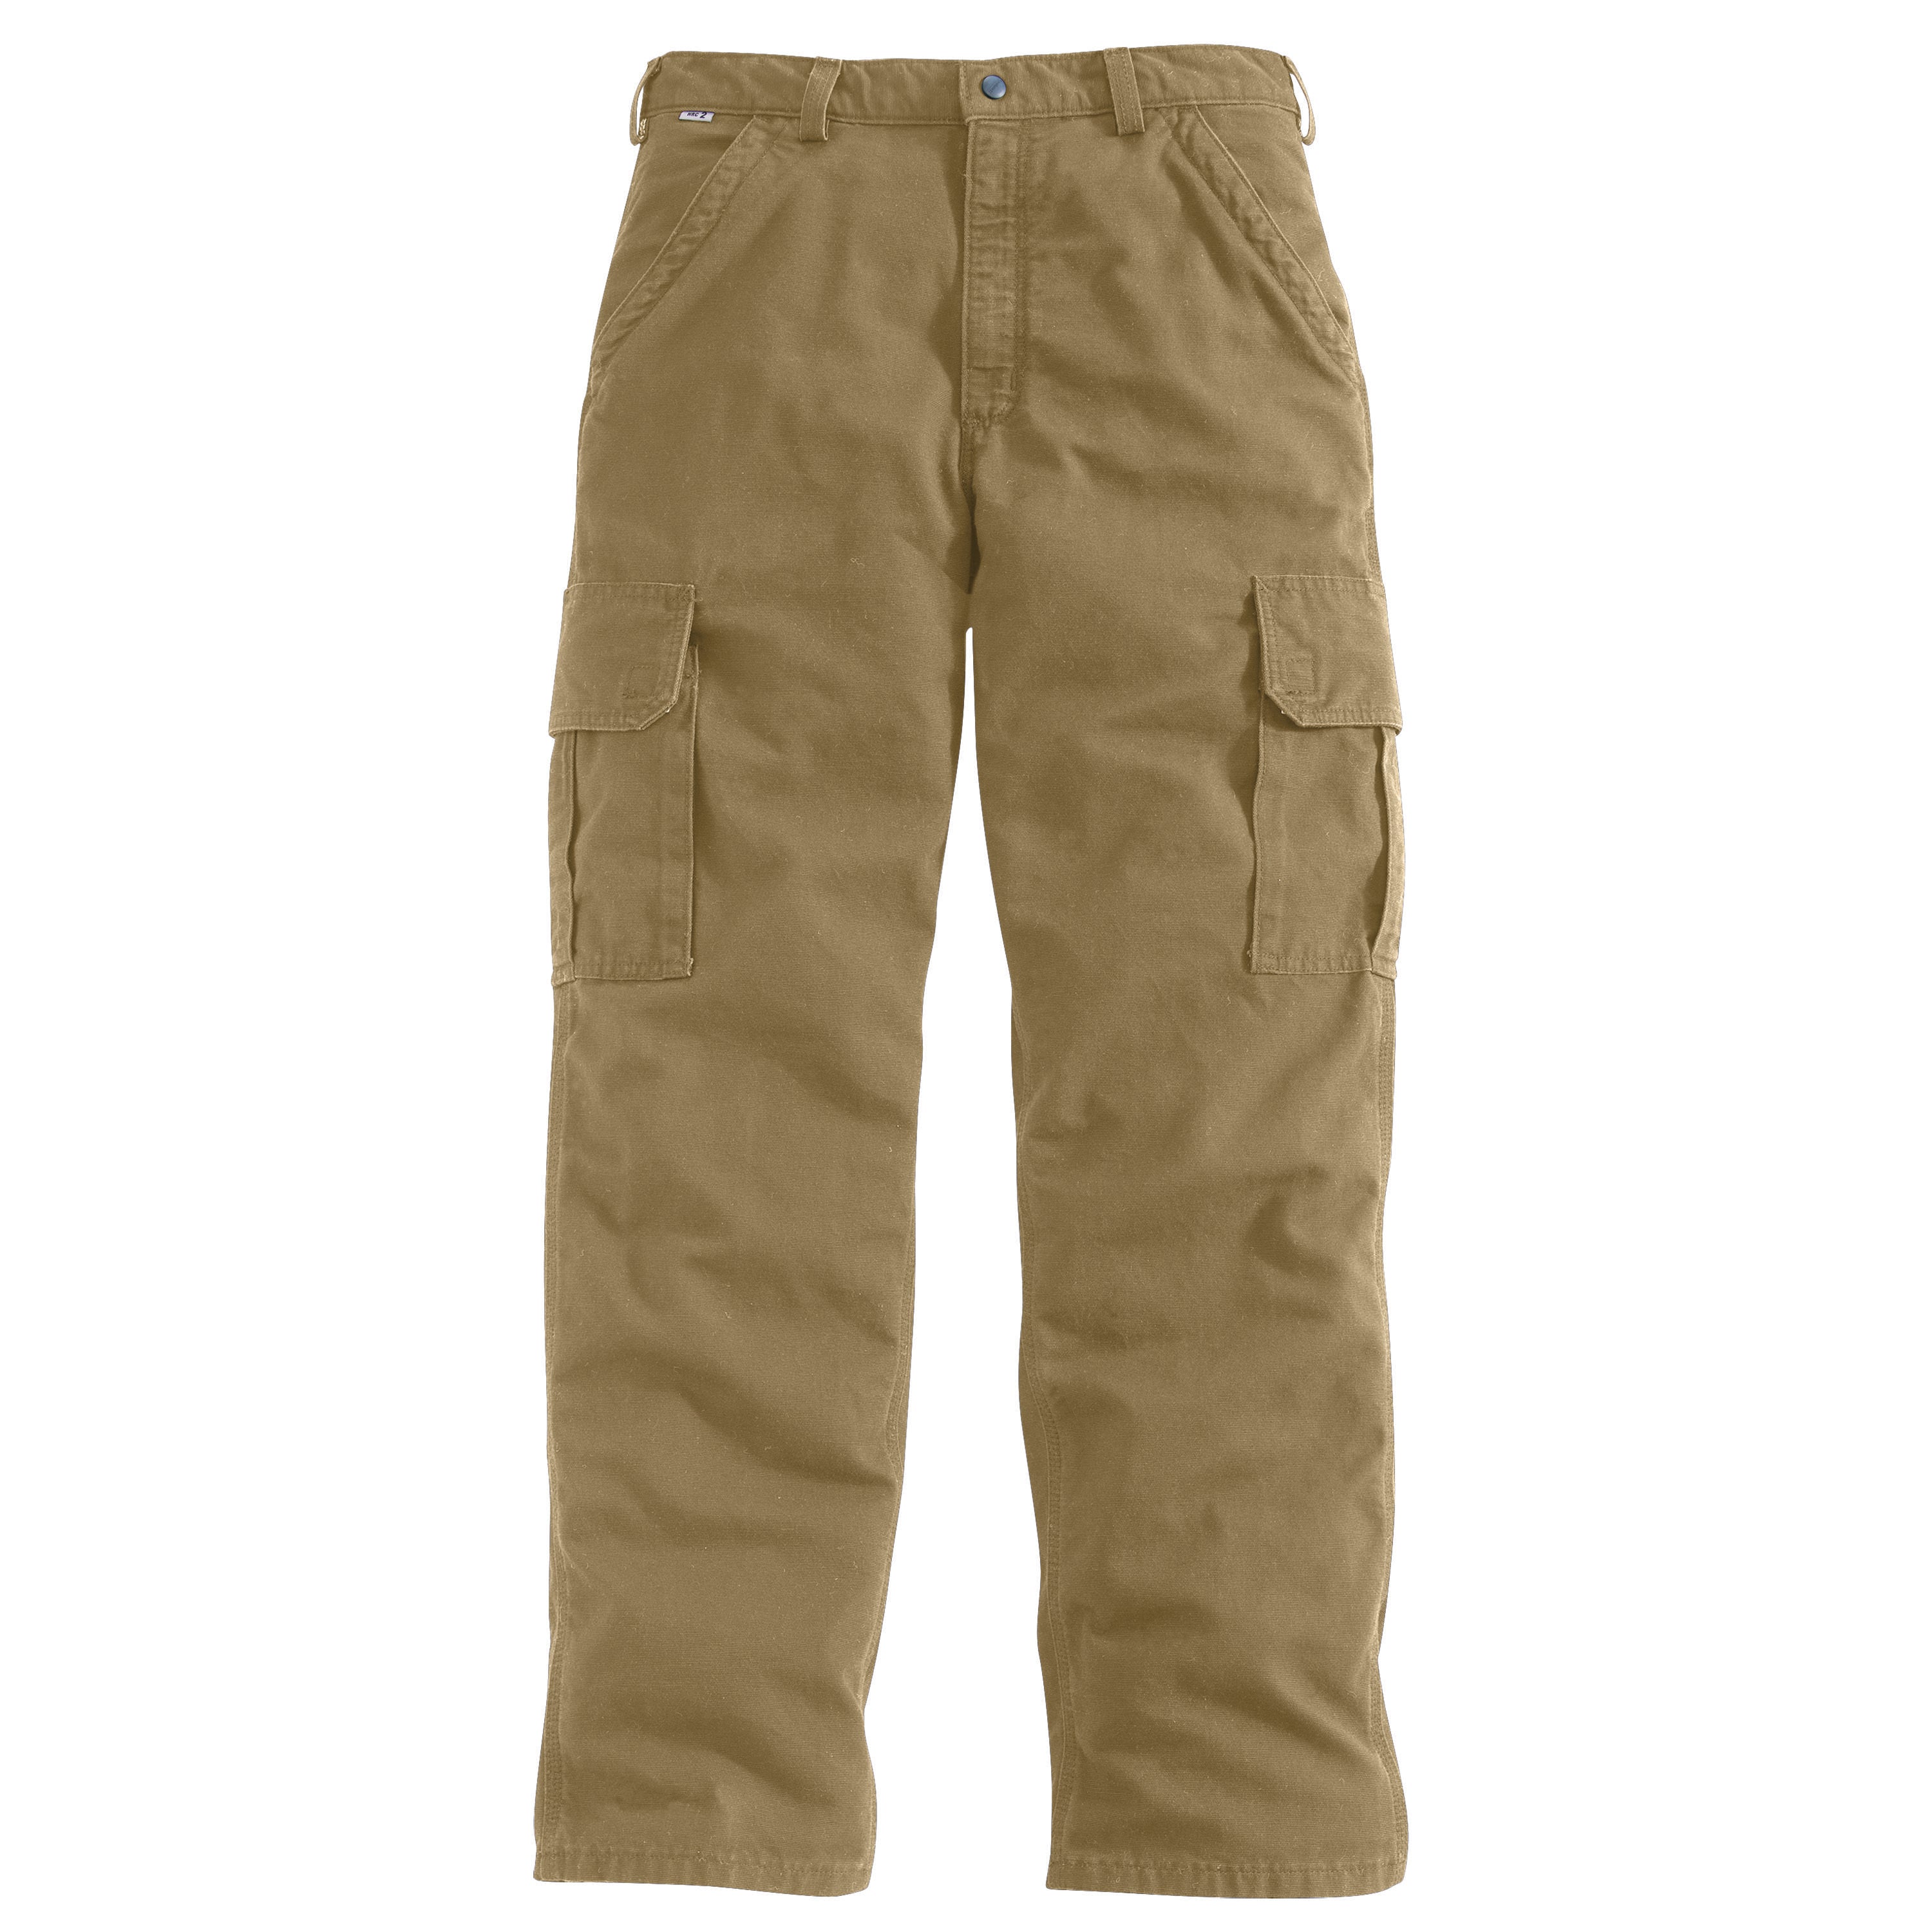 'Carhartt' Men's Flame Resistant Canvas Cargo Pant - Golden Khaki